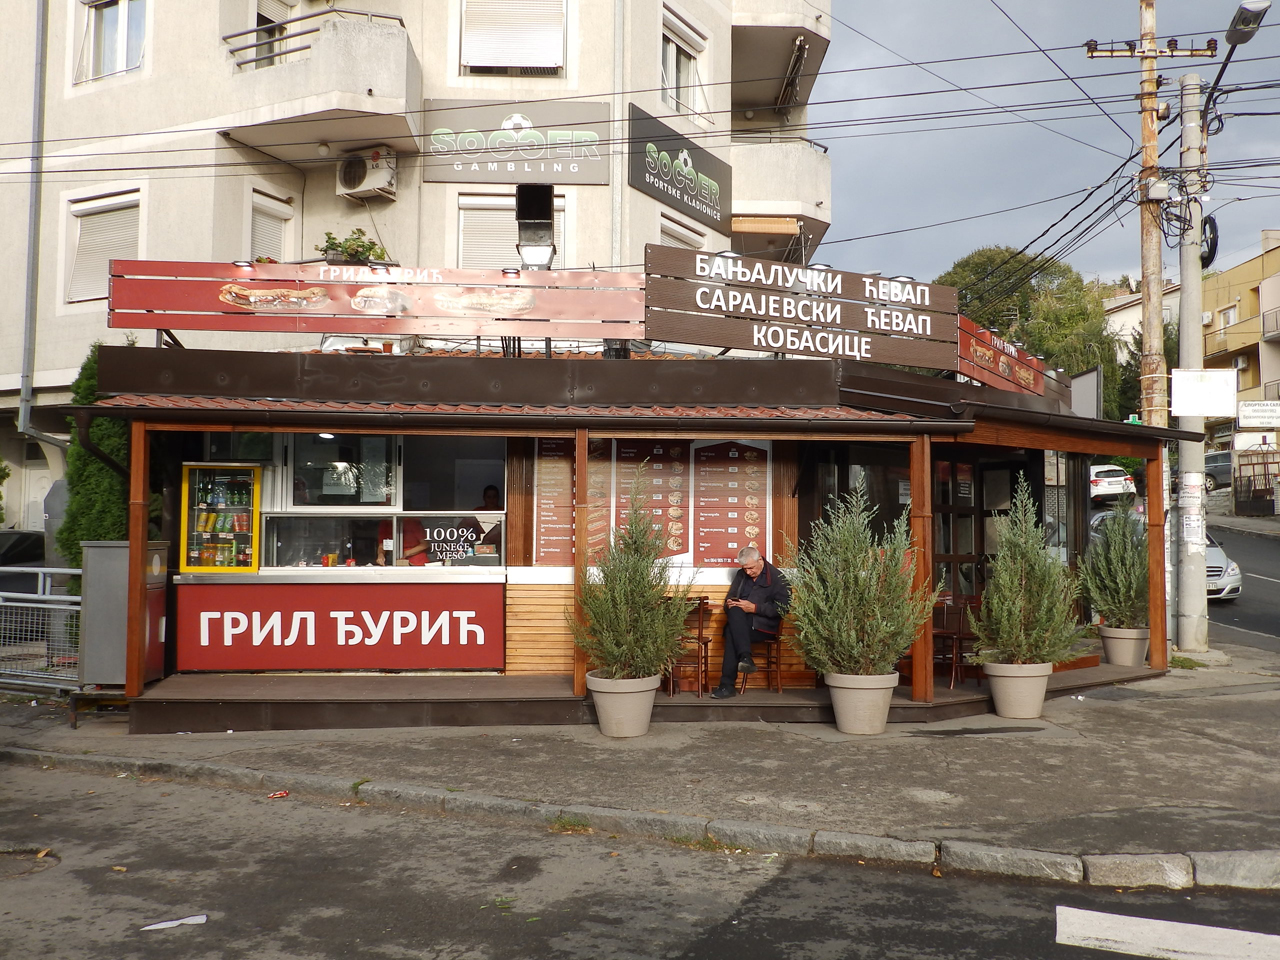 BANJALUCKI I SARAJEVSKI CEVAP GRILL DJURIC Grill Belgrade - Photo 1